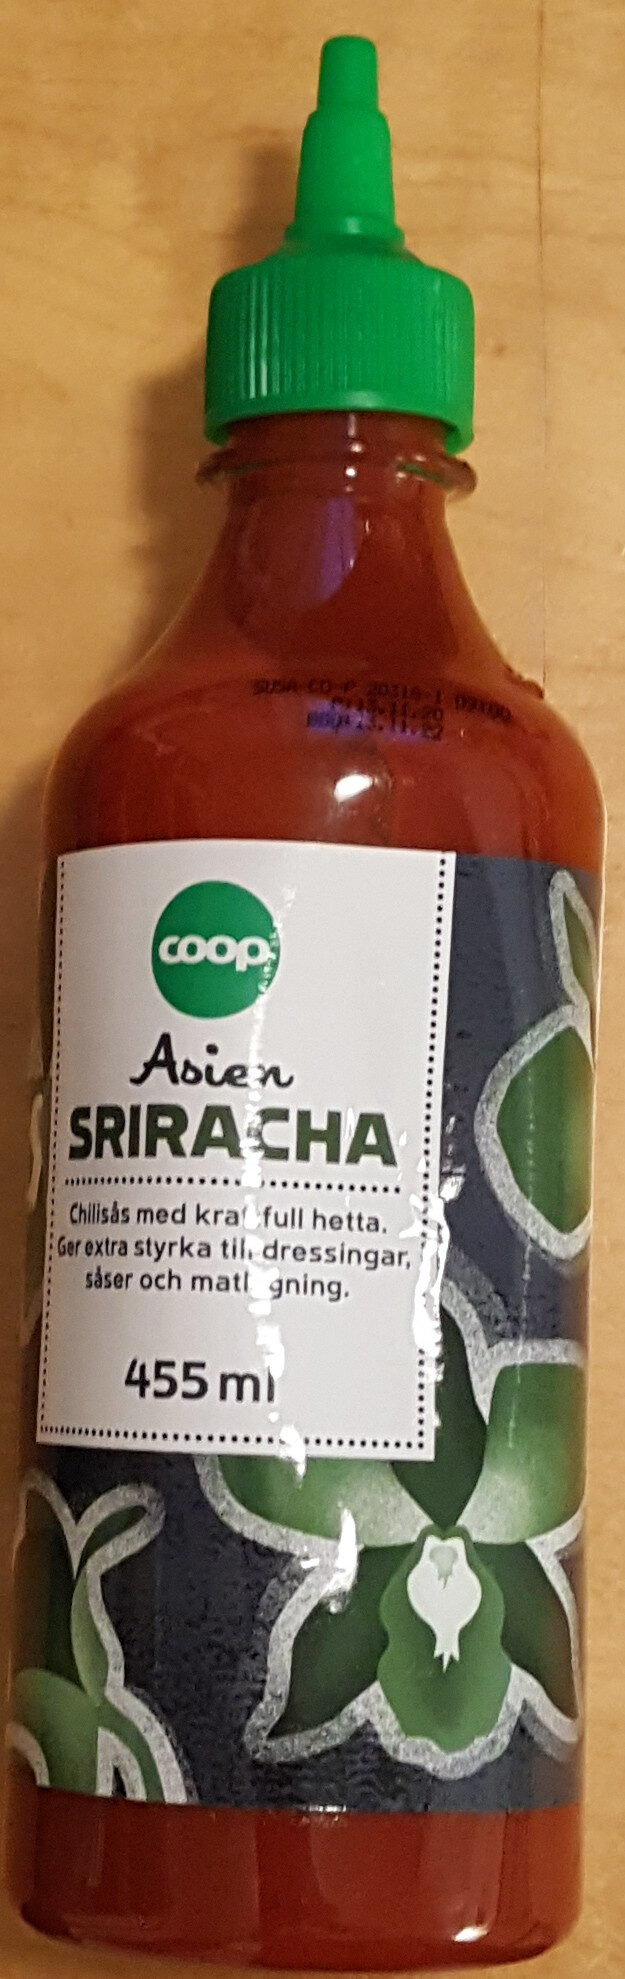 Asien Sriracha - Produkt - sv